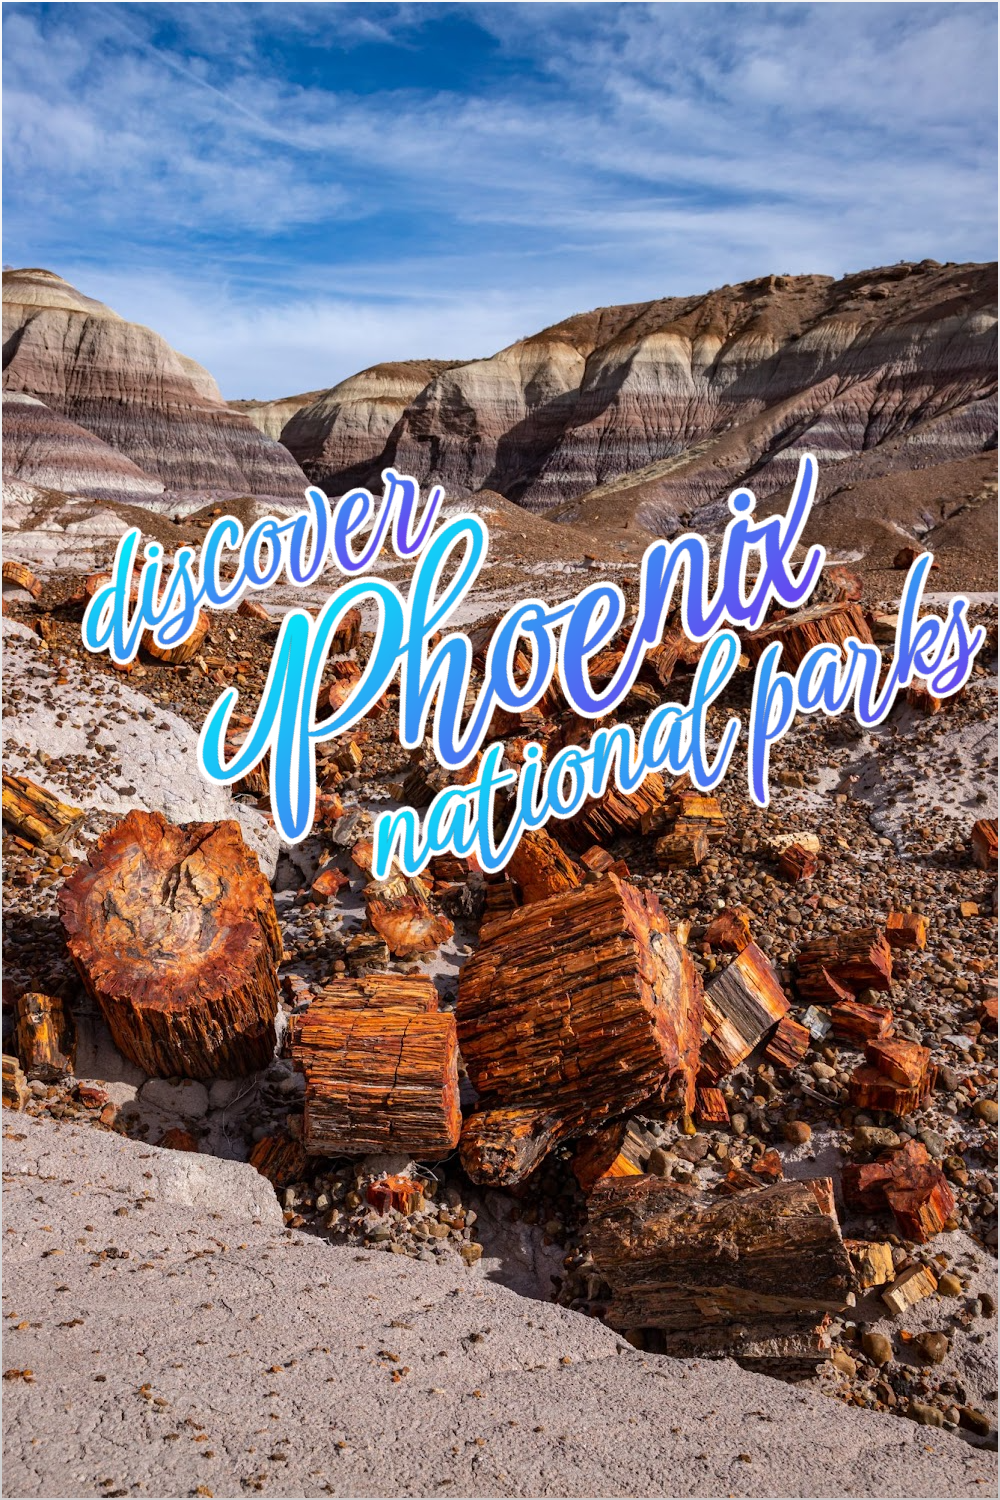 Discover phoenix national parks.